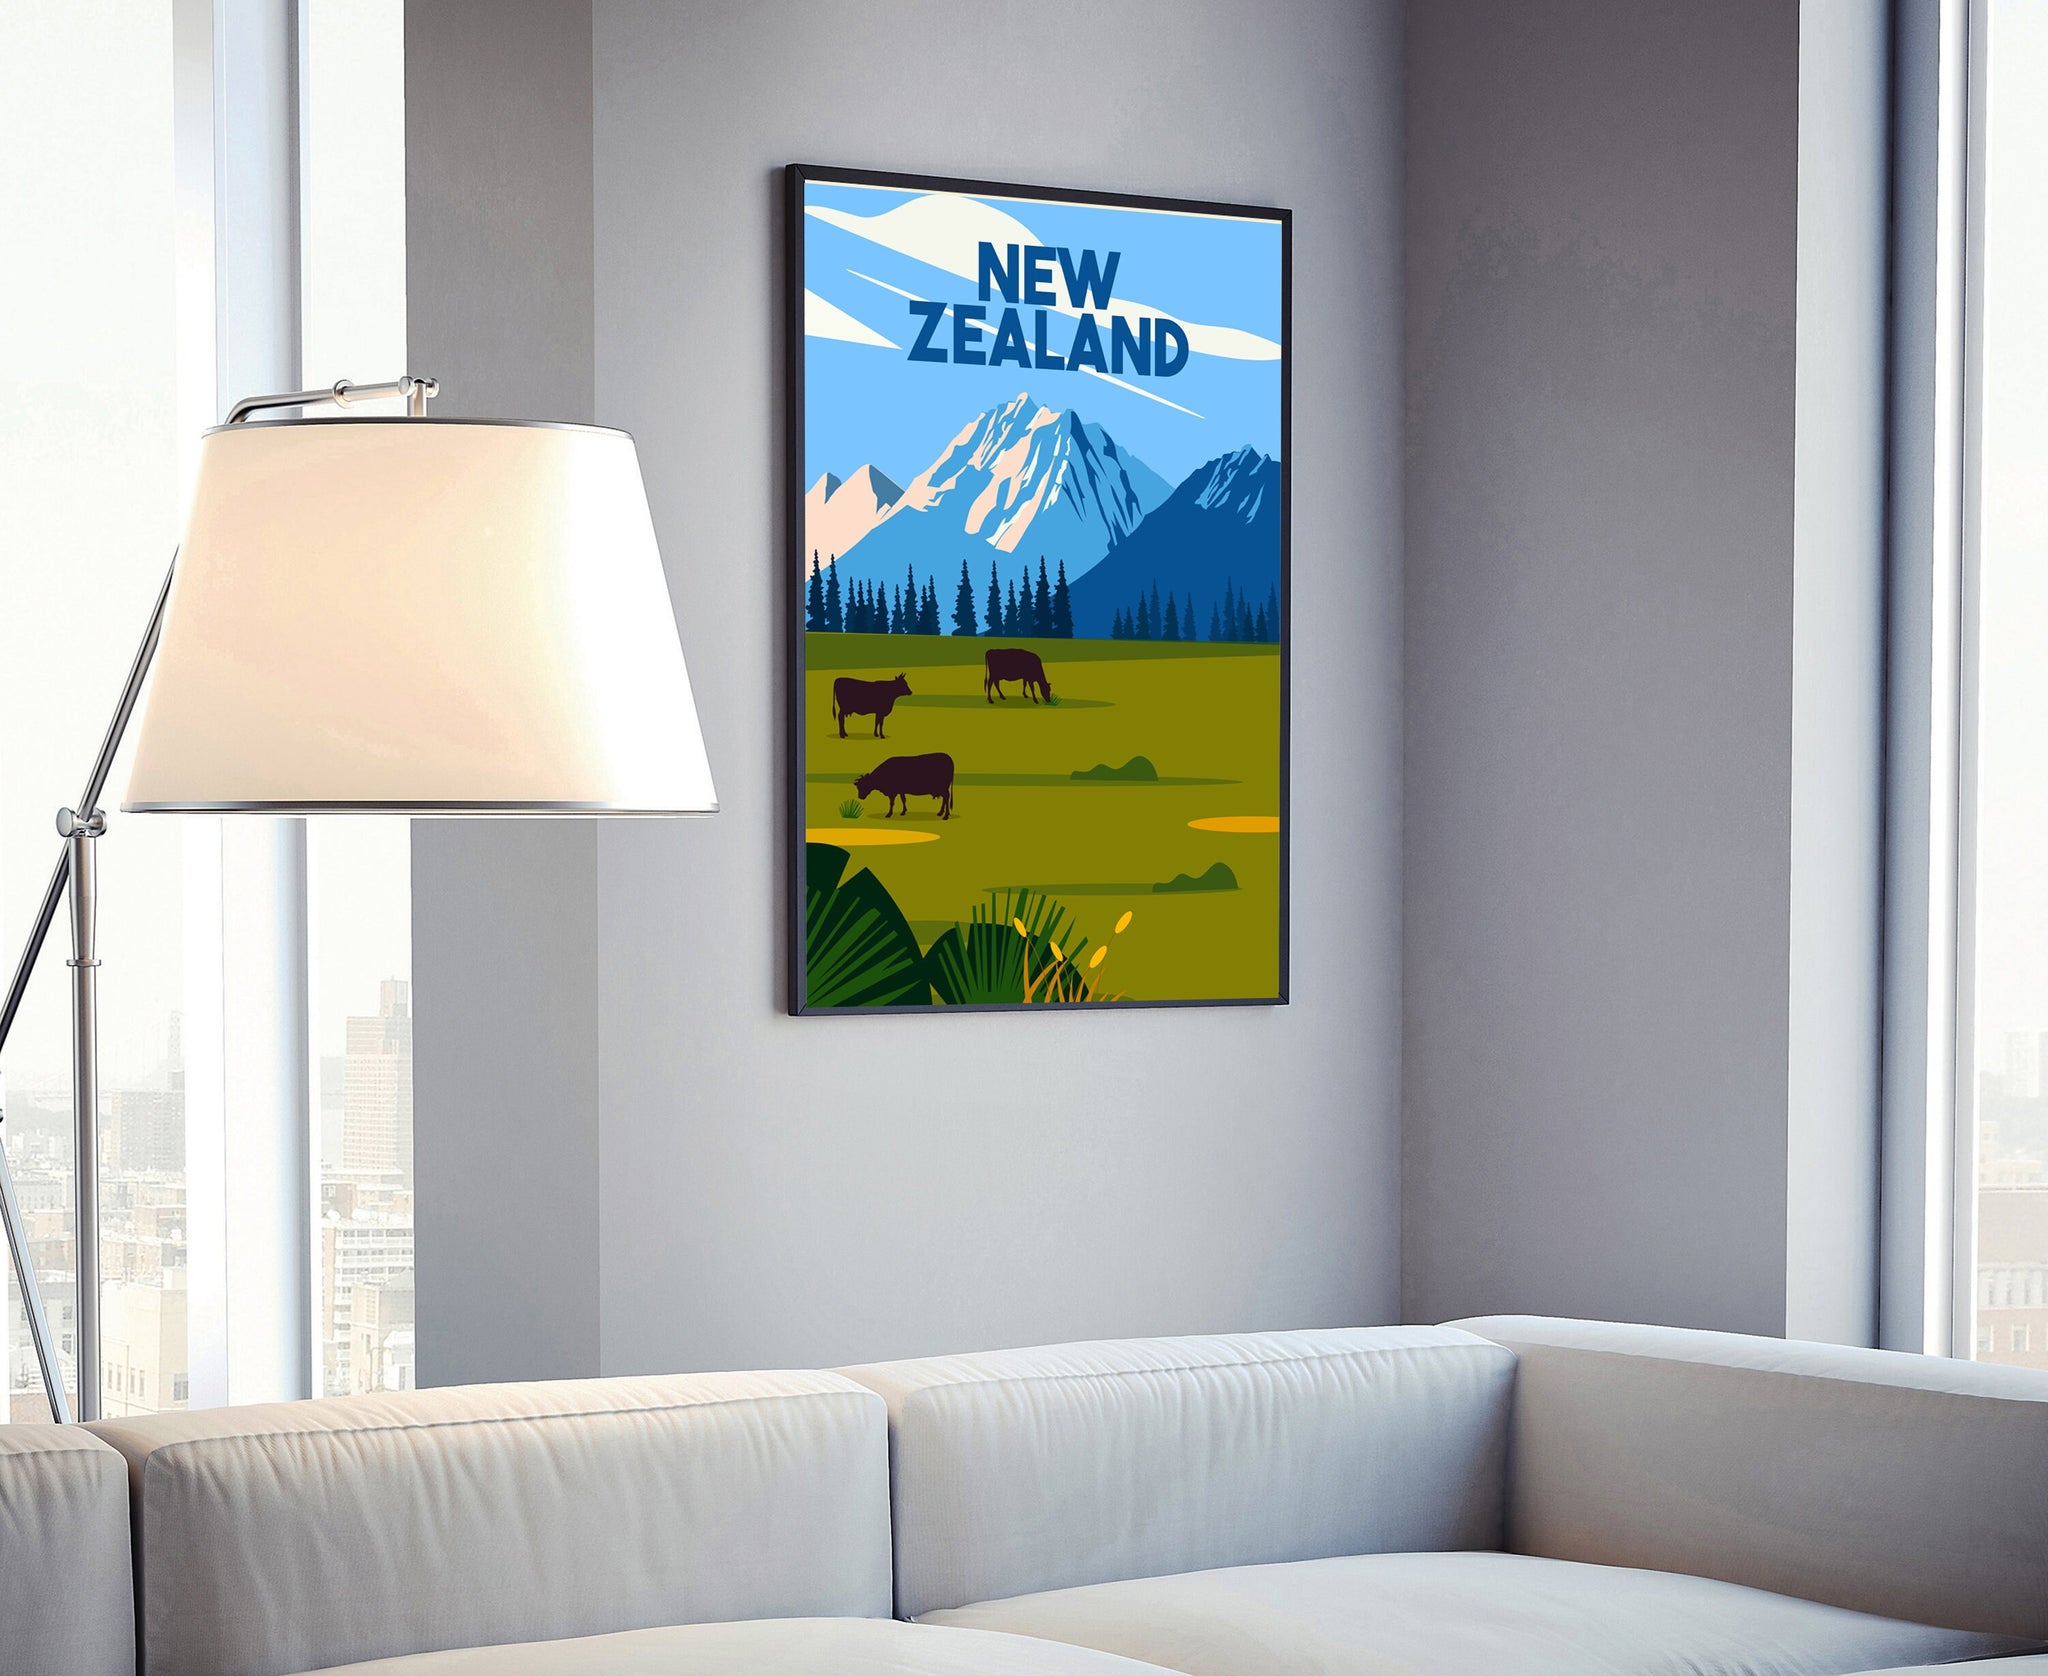 NEW ZEALAND travel poster, New Zealand cityscape landmark poster wall art, Home wall art, Office wall decoration, New Zealand vintage poster